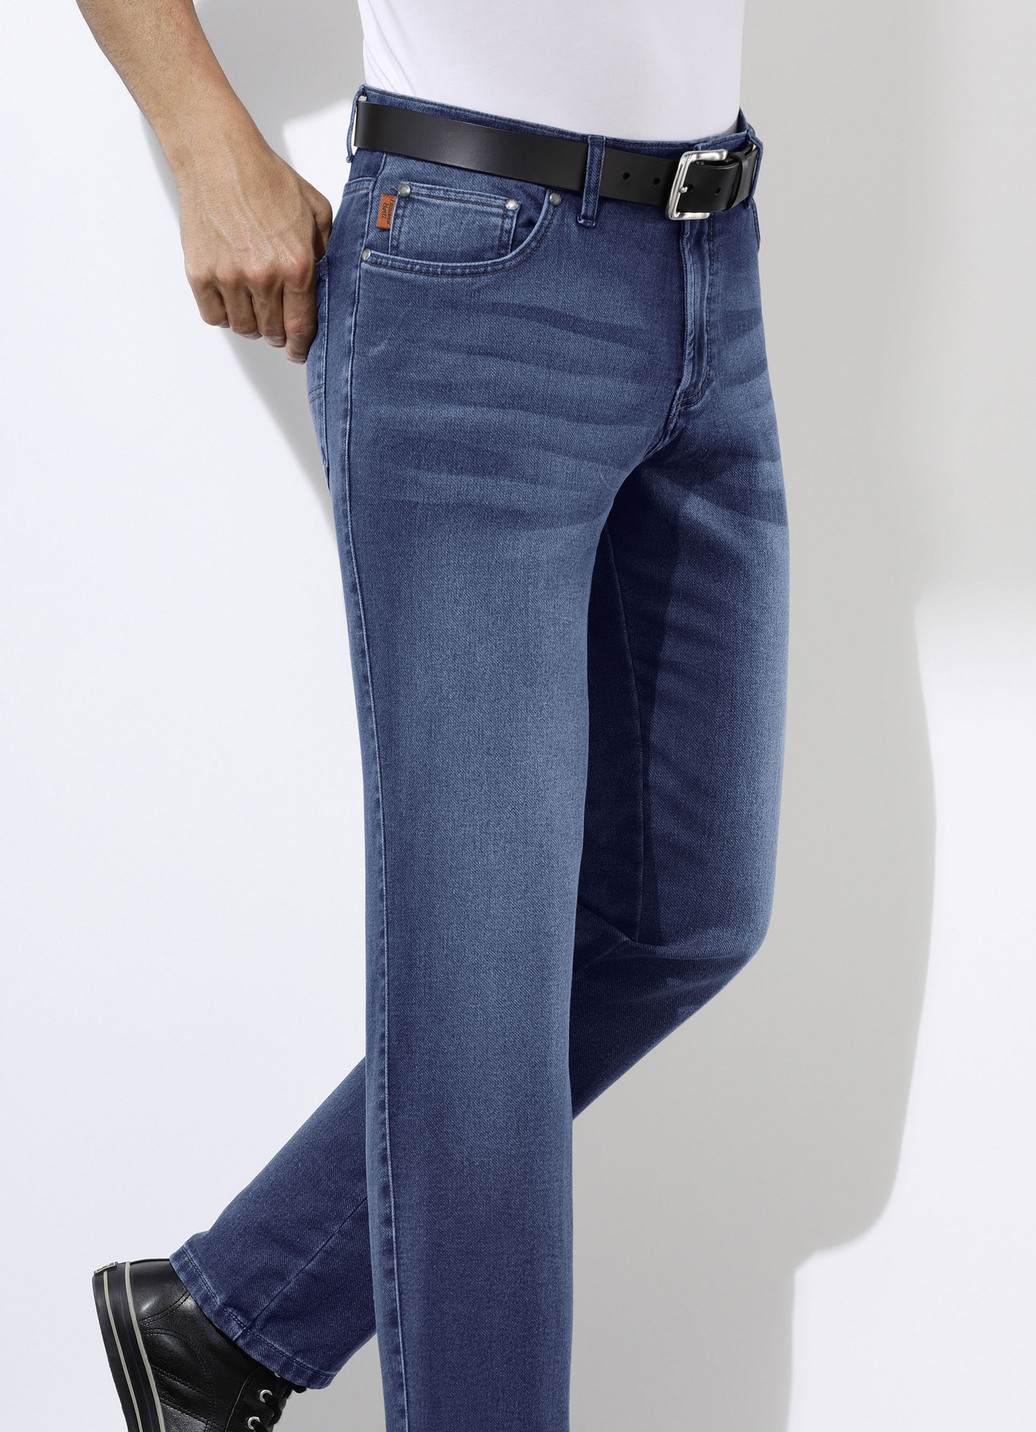 "Francesco Botti"-Jeans in 3 Farben, Jeansblau, Größe 30 von FRANCESCO BOTTI